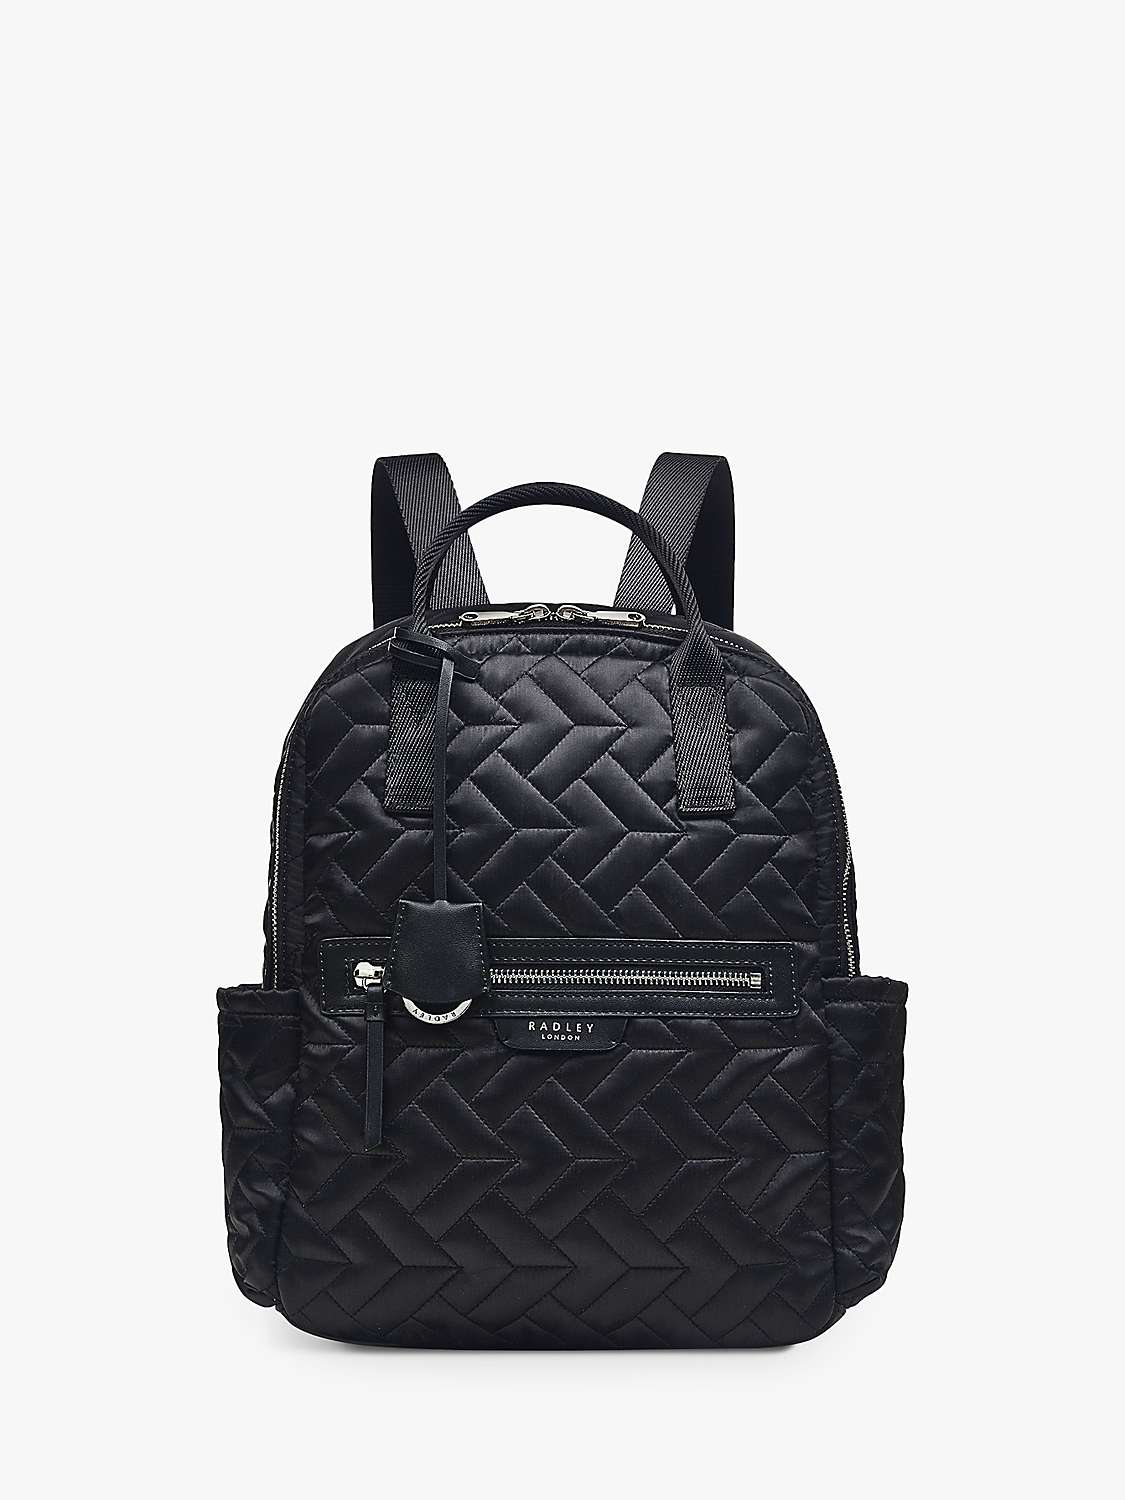 Buy Radley Finsbury Park Medium Zip Around Quilted Backpack Online at johnlewis.com